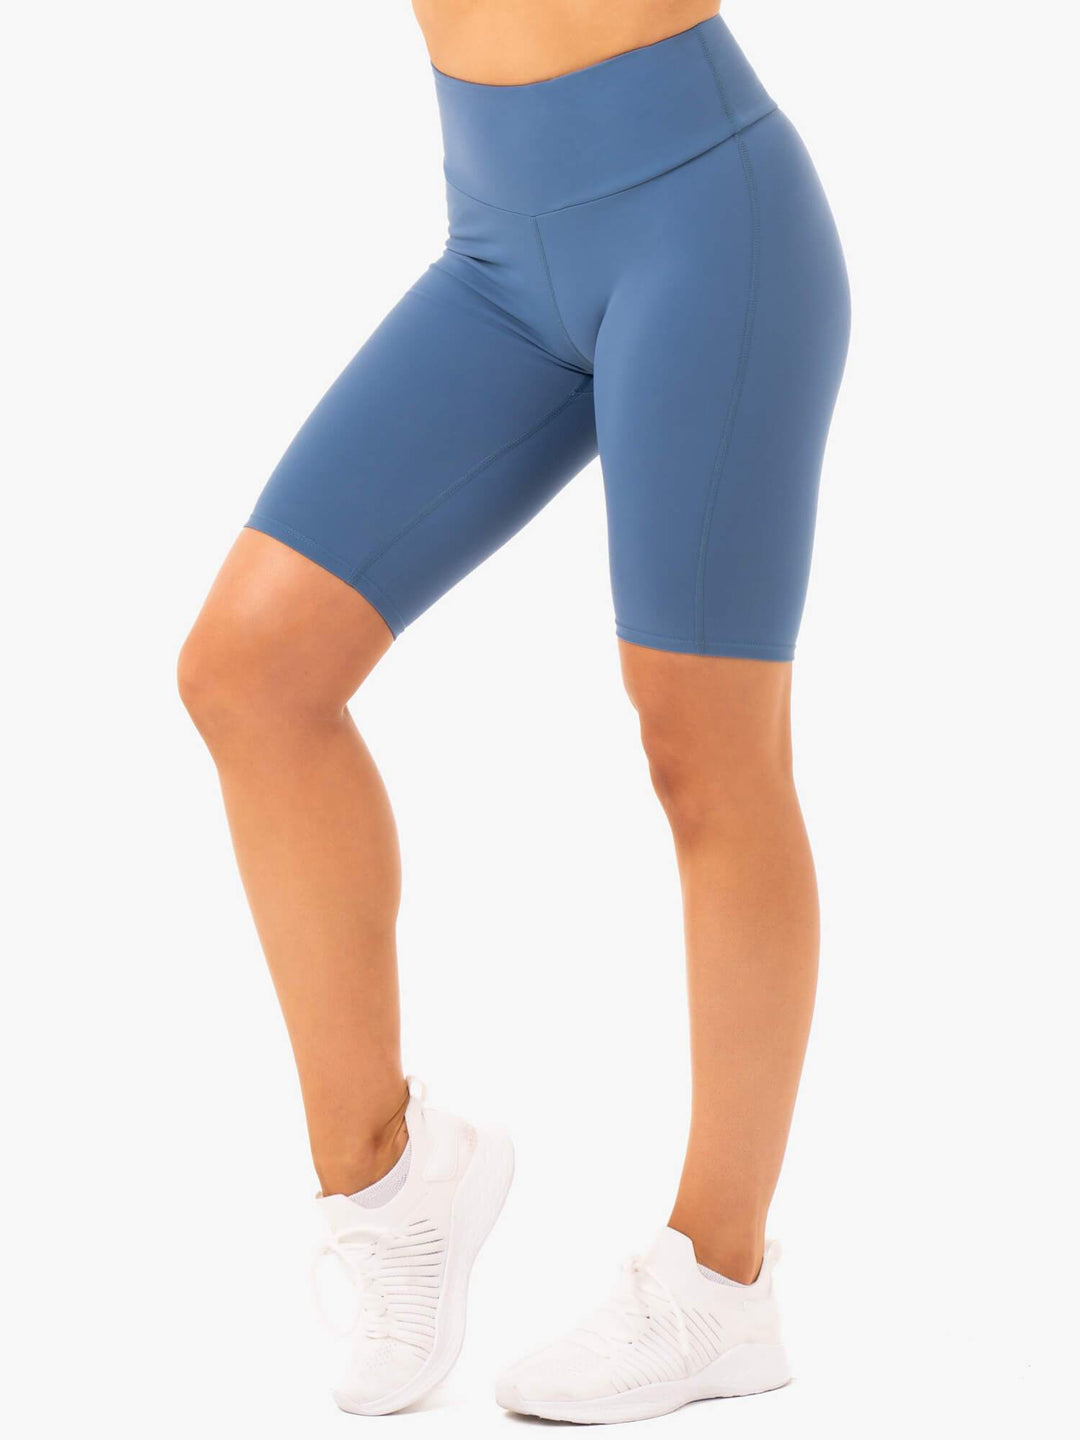 Staples Bike Shorts - Steel Blue Clothing Ryderwear 